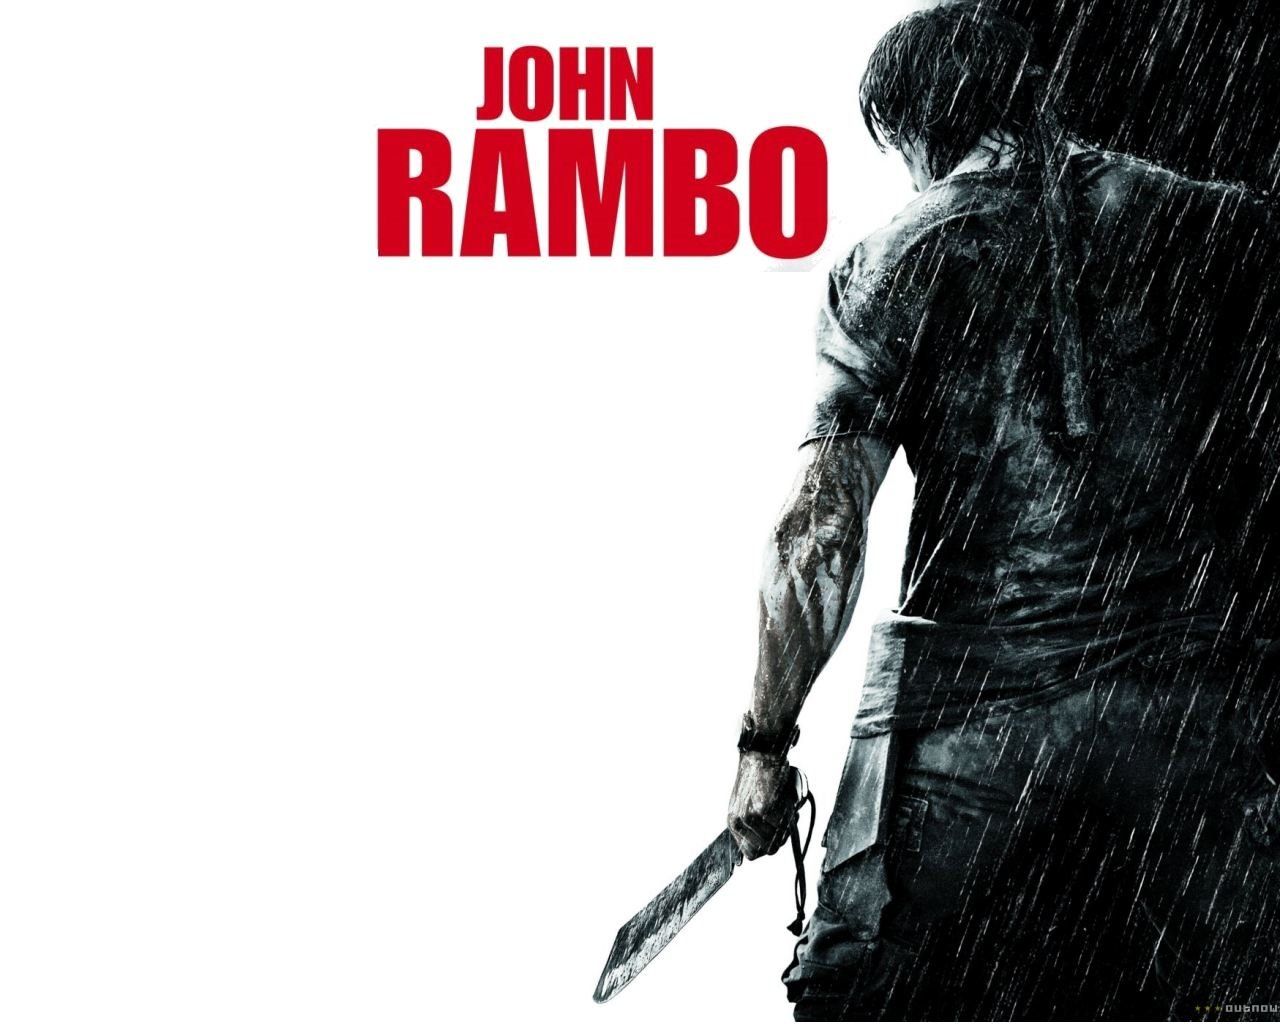 Rambo Last Blood Wallpapers